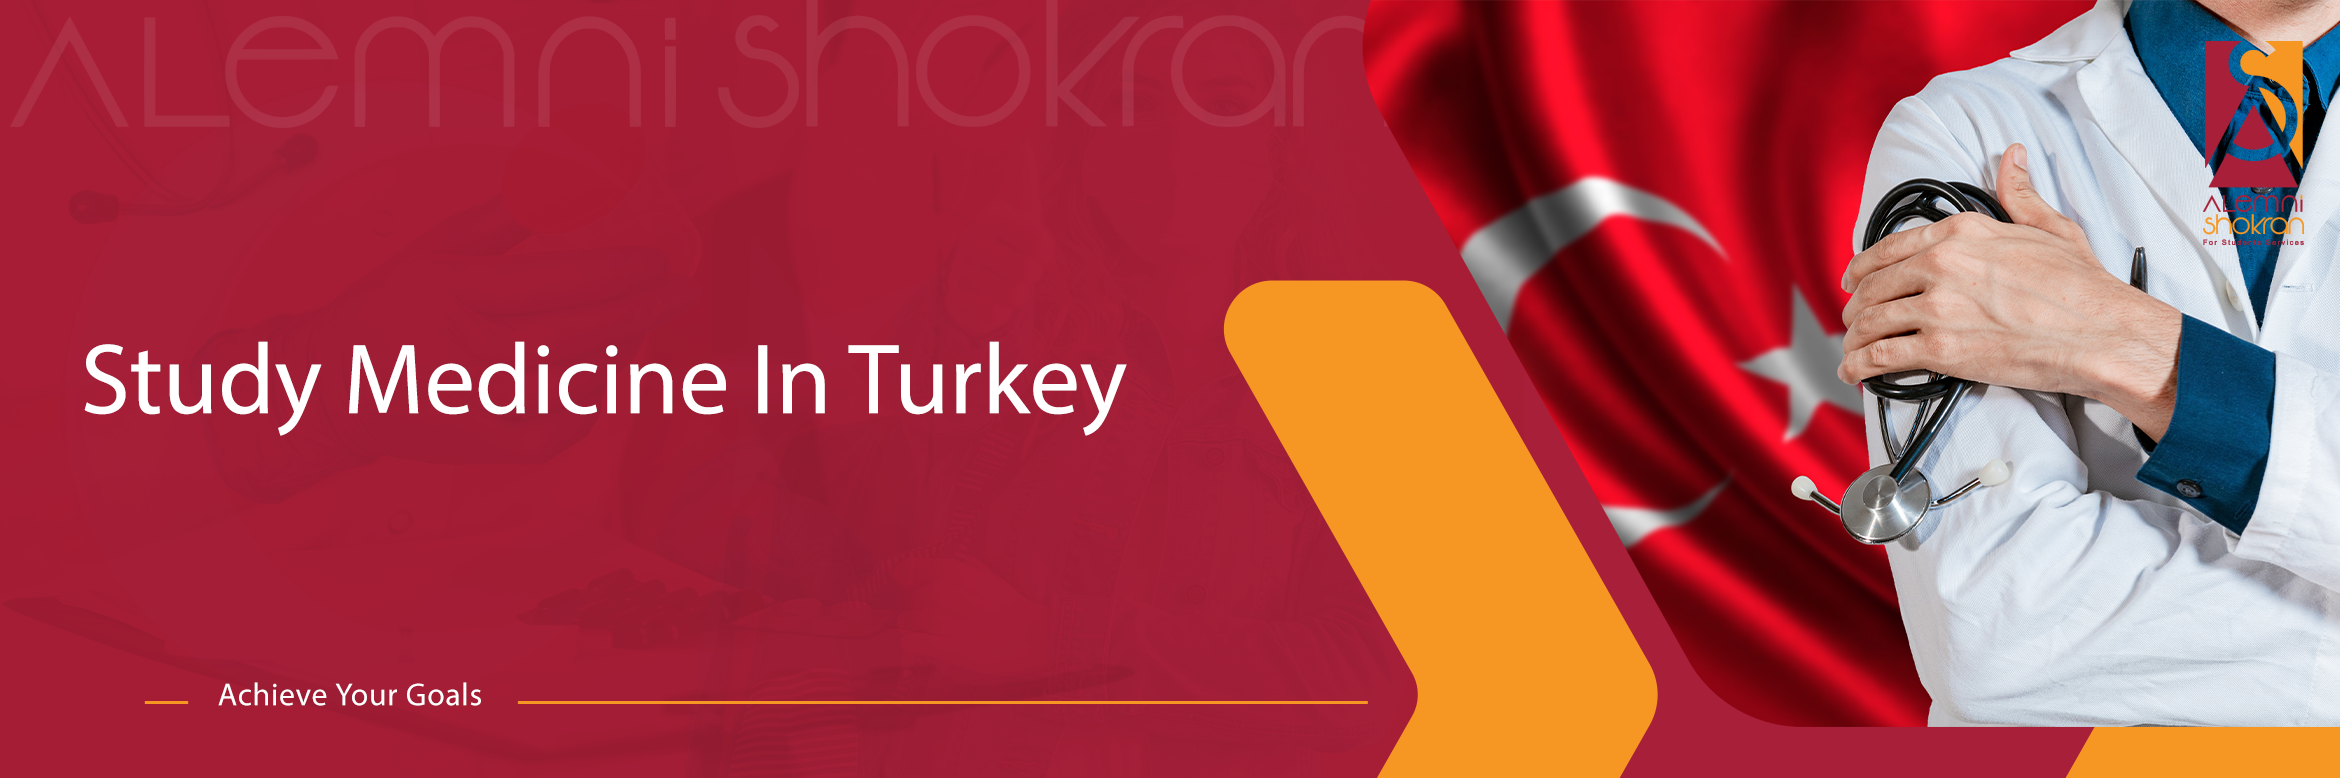 Study Medicine In Turkey